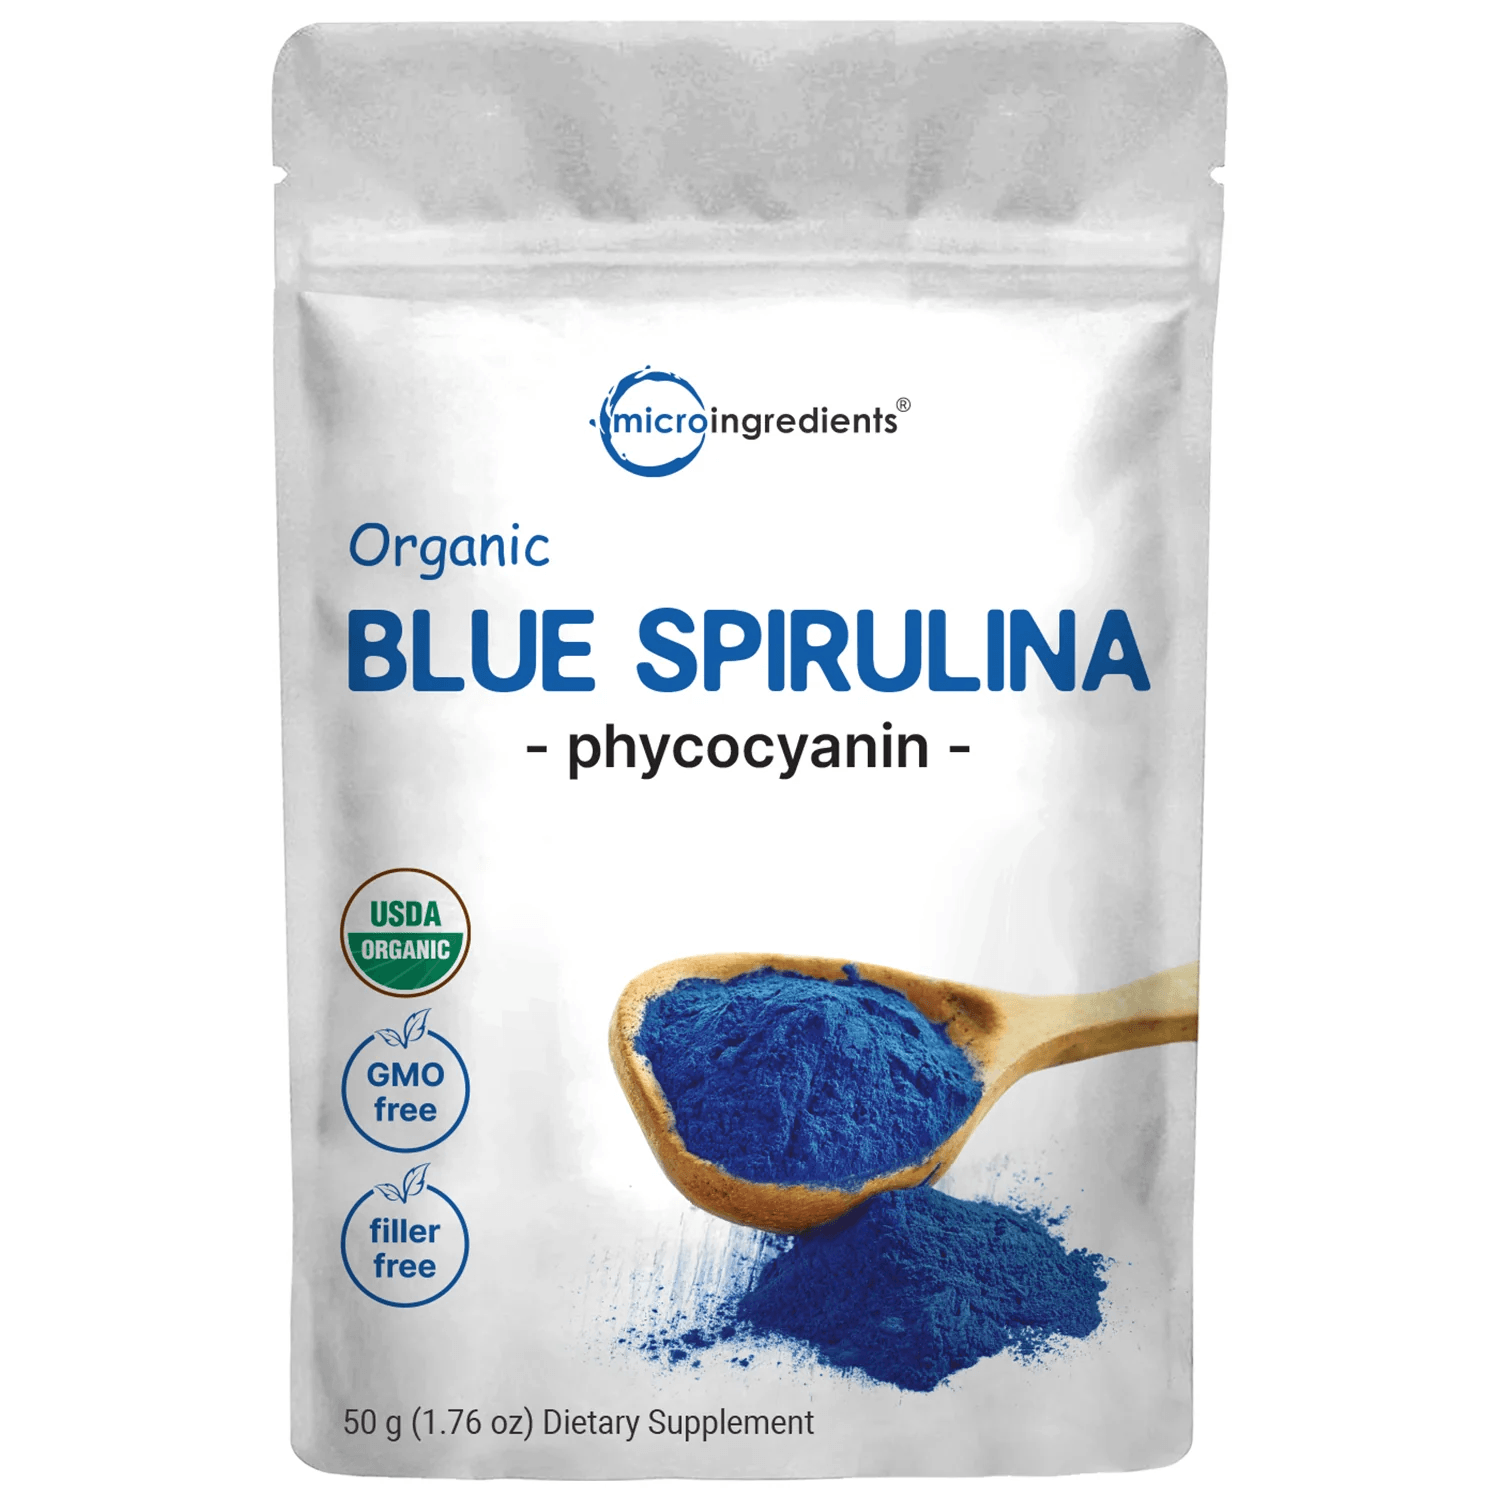 Microingredients Organic Blue Spirulina 50g